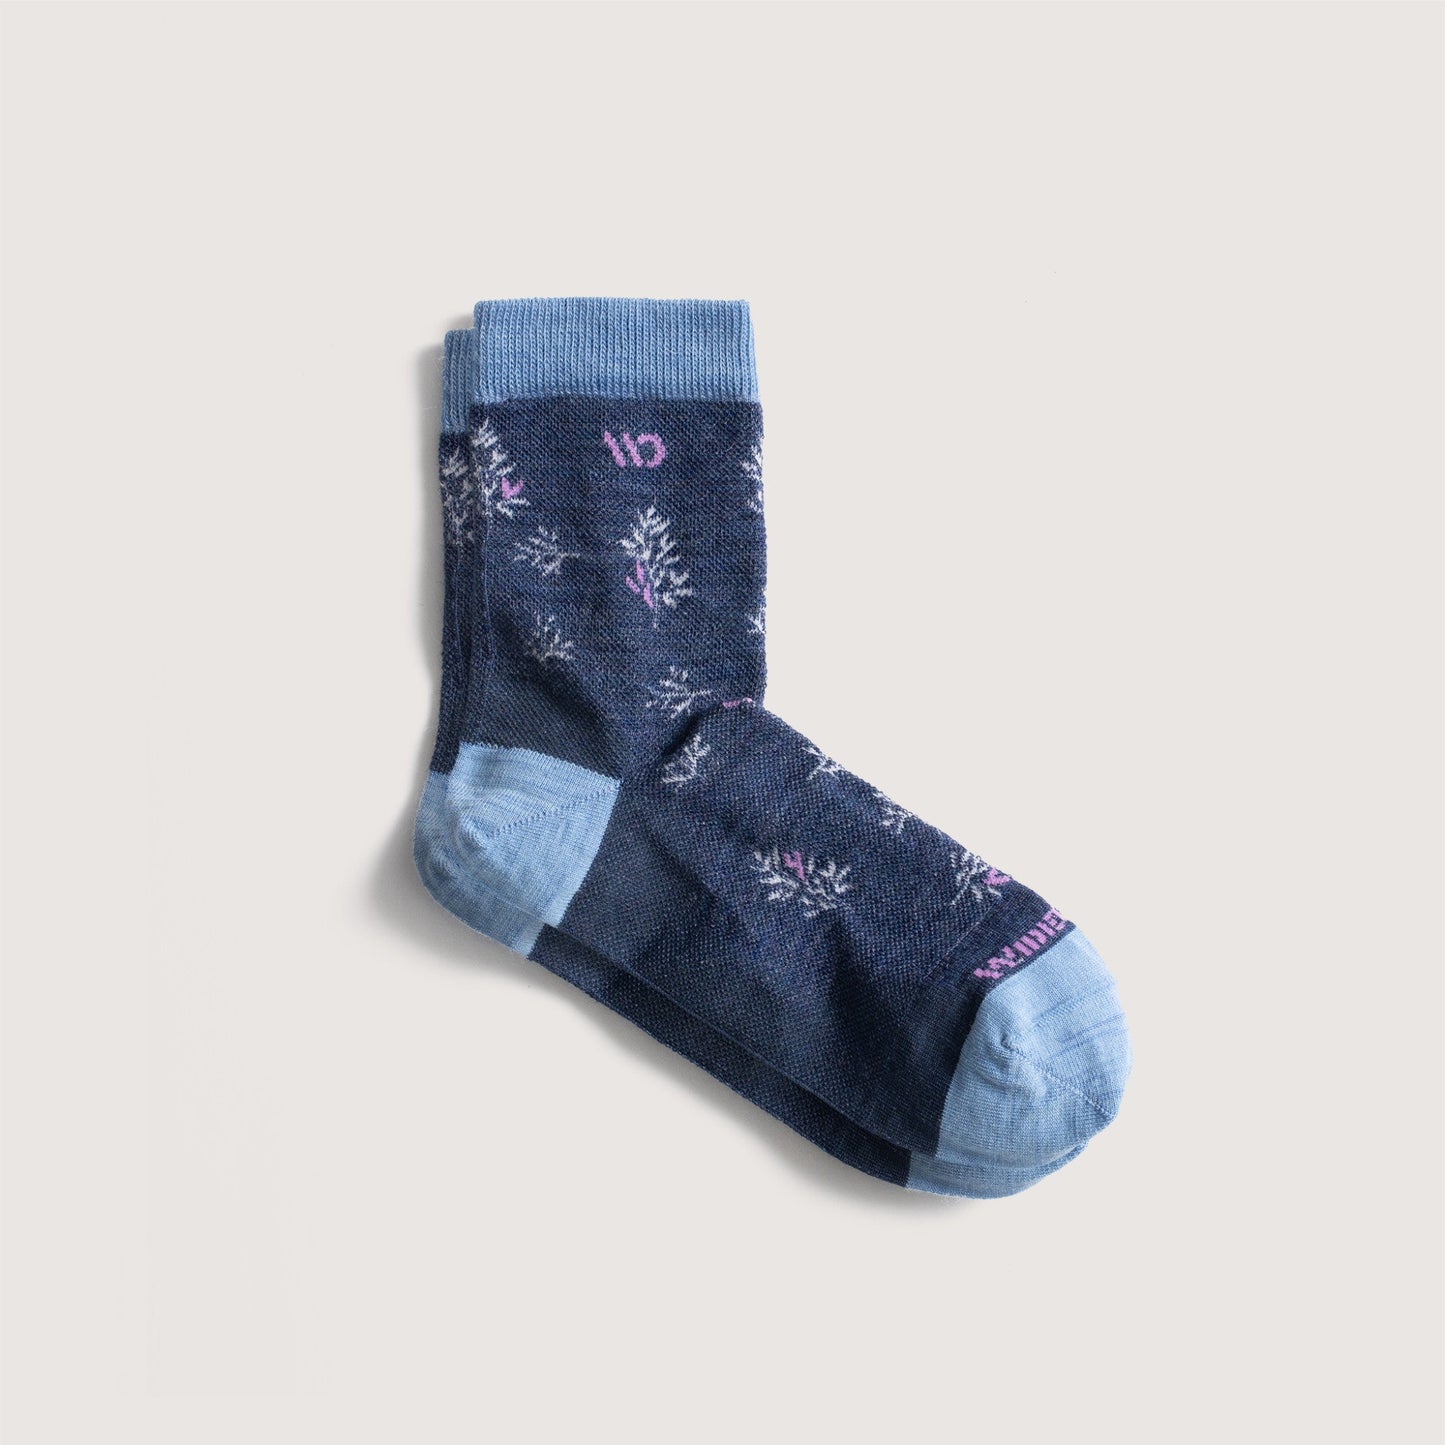 Flat socks, featuring light blue heel/toe, denim body, lavender logo and white detail --Light Gray/Teal/Denim/Taupe